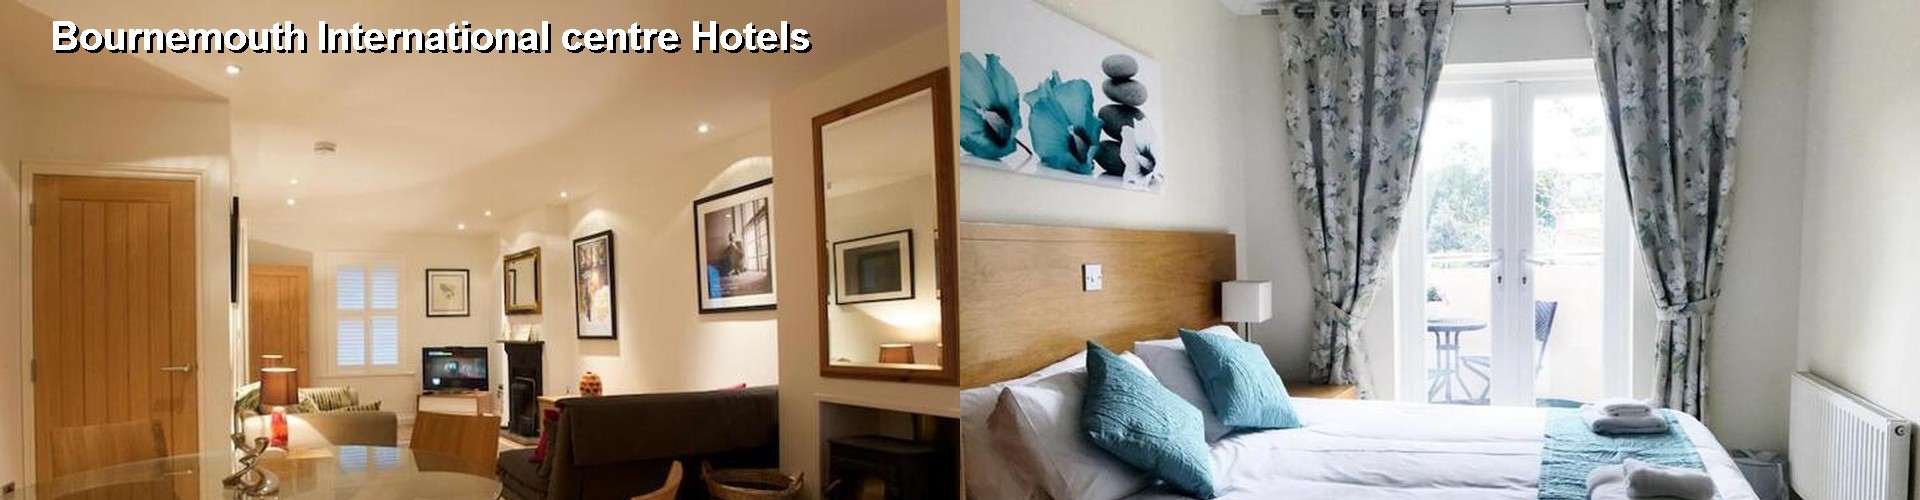 4 Best Hotels near Bournemouth International centre